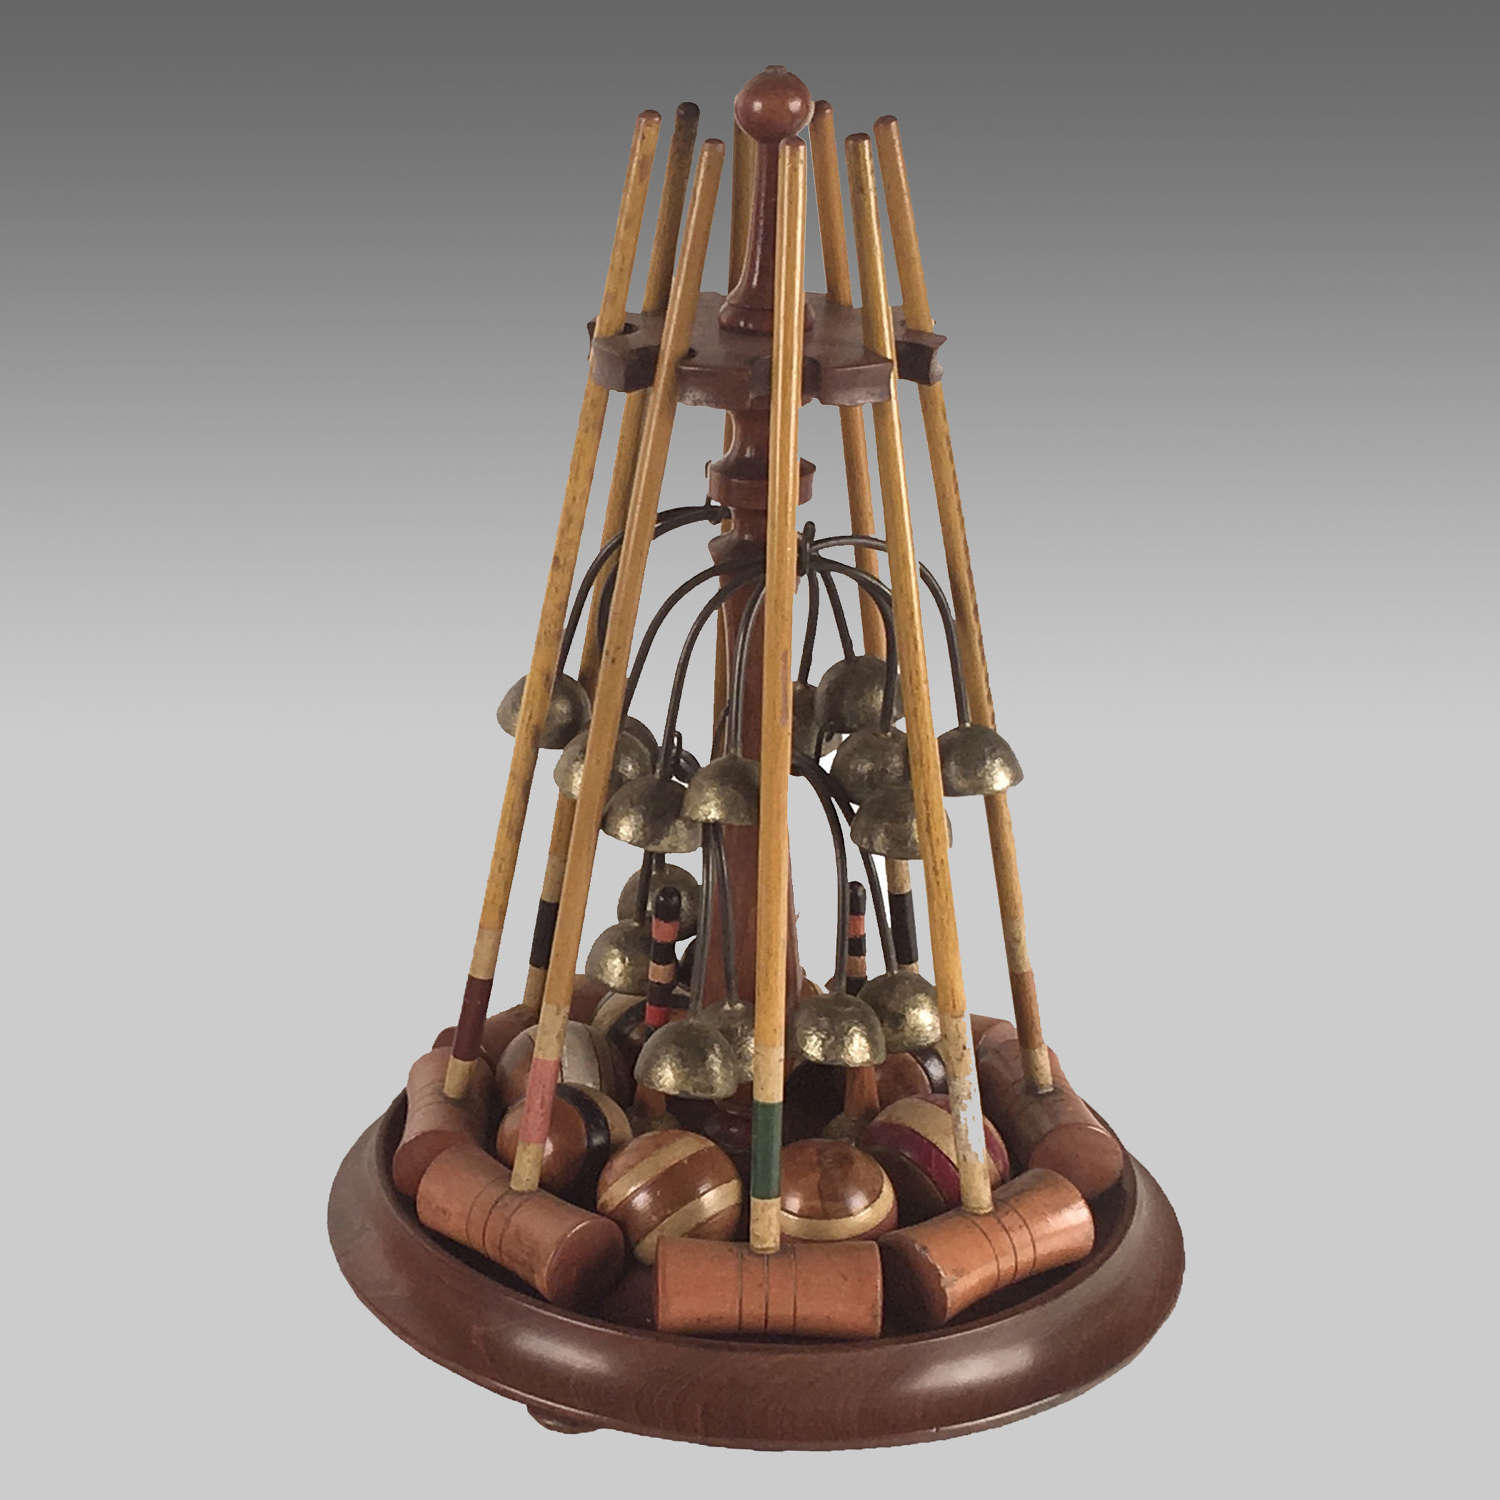 19th century miniature indoor croquet set